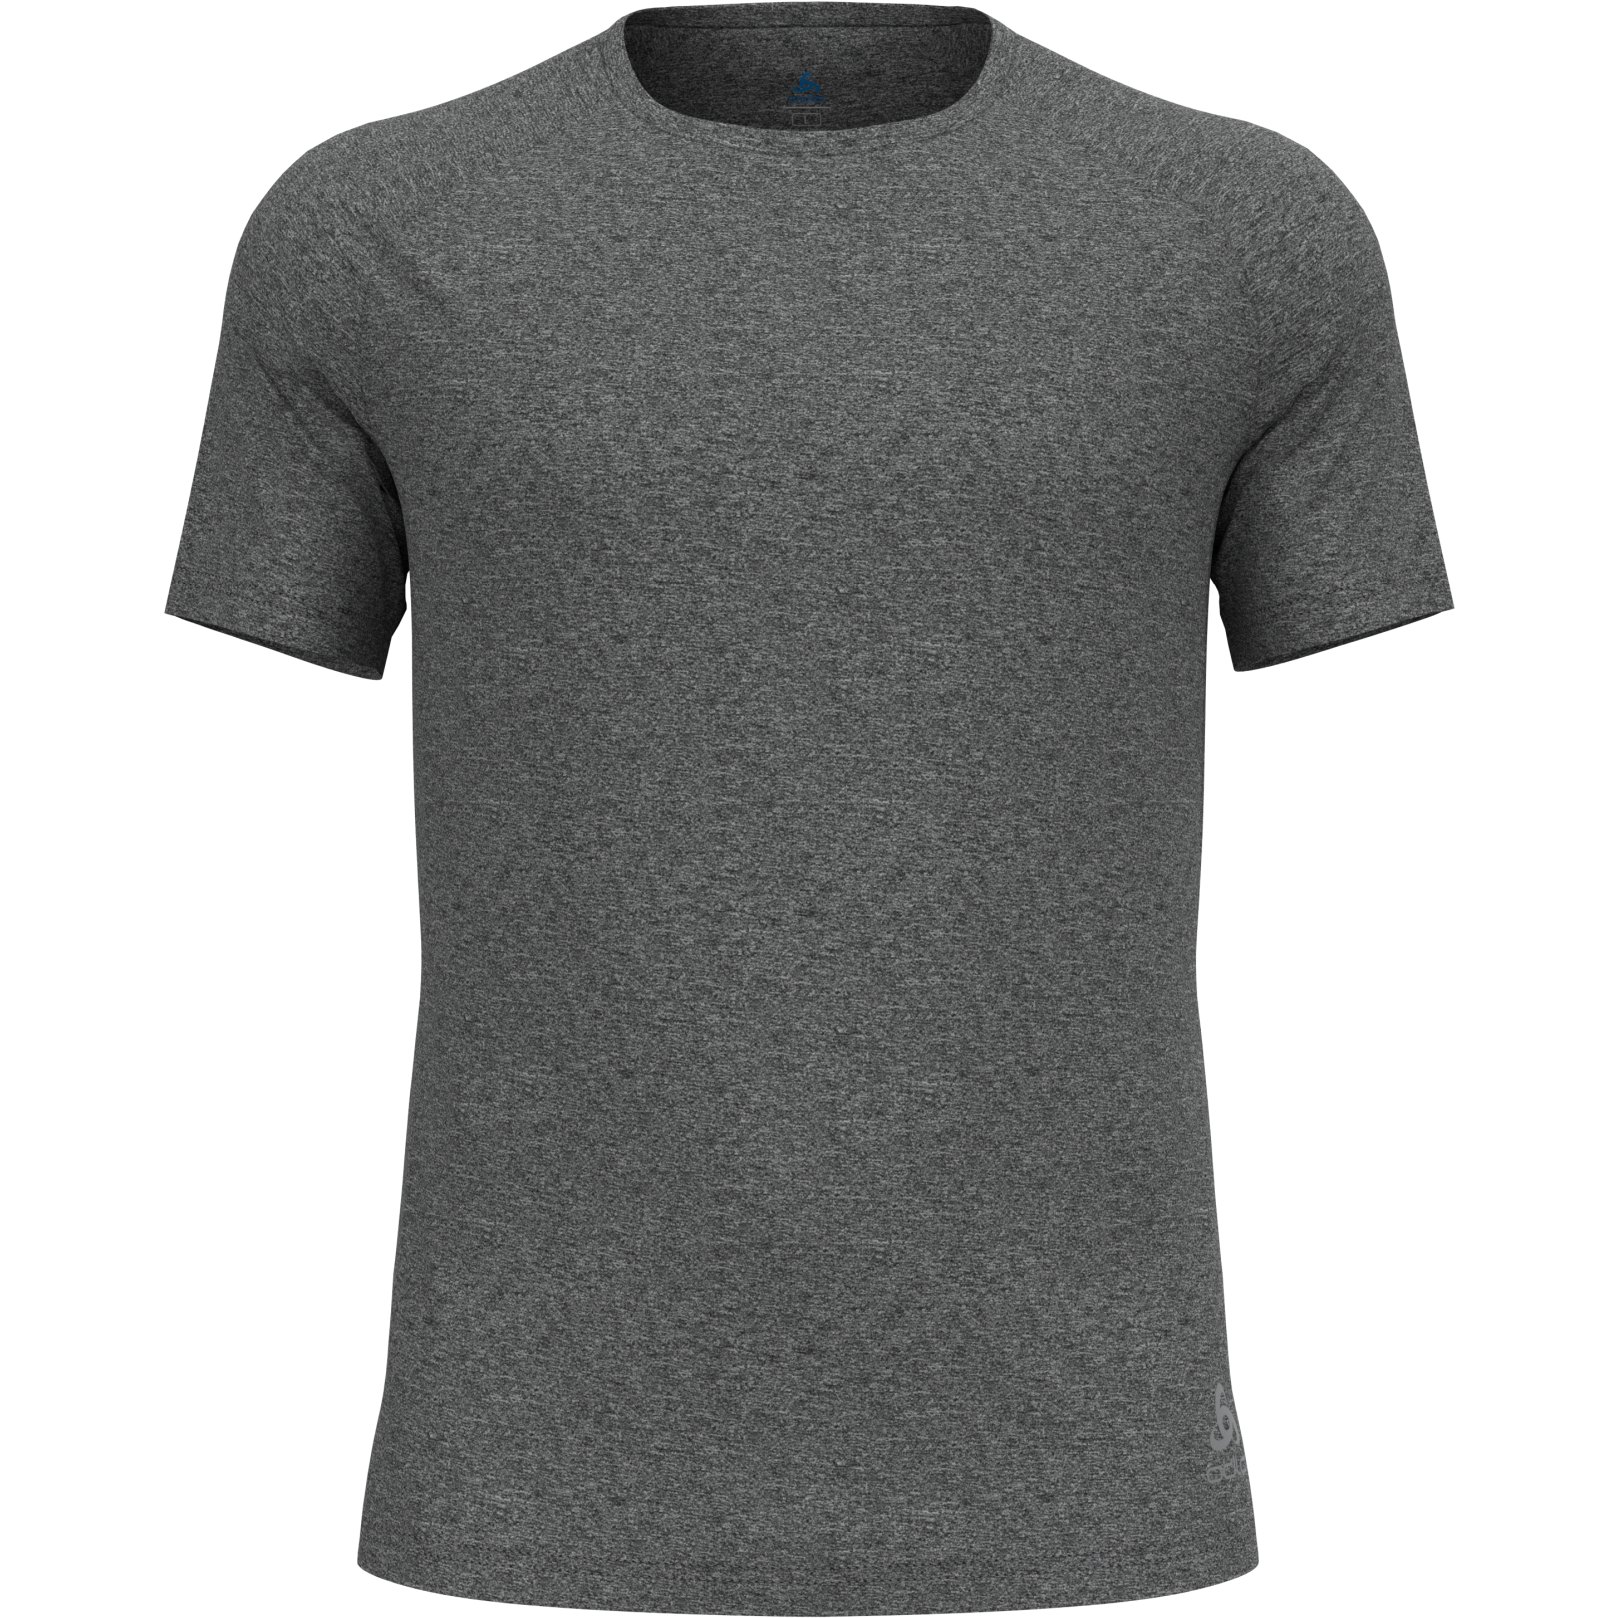 Produktbild von Odlo Herren Active 365 T-Shirt - grey melange